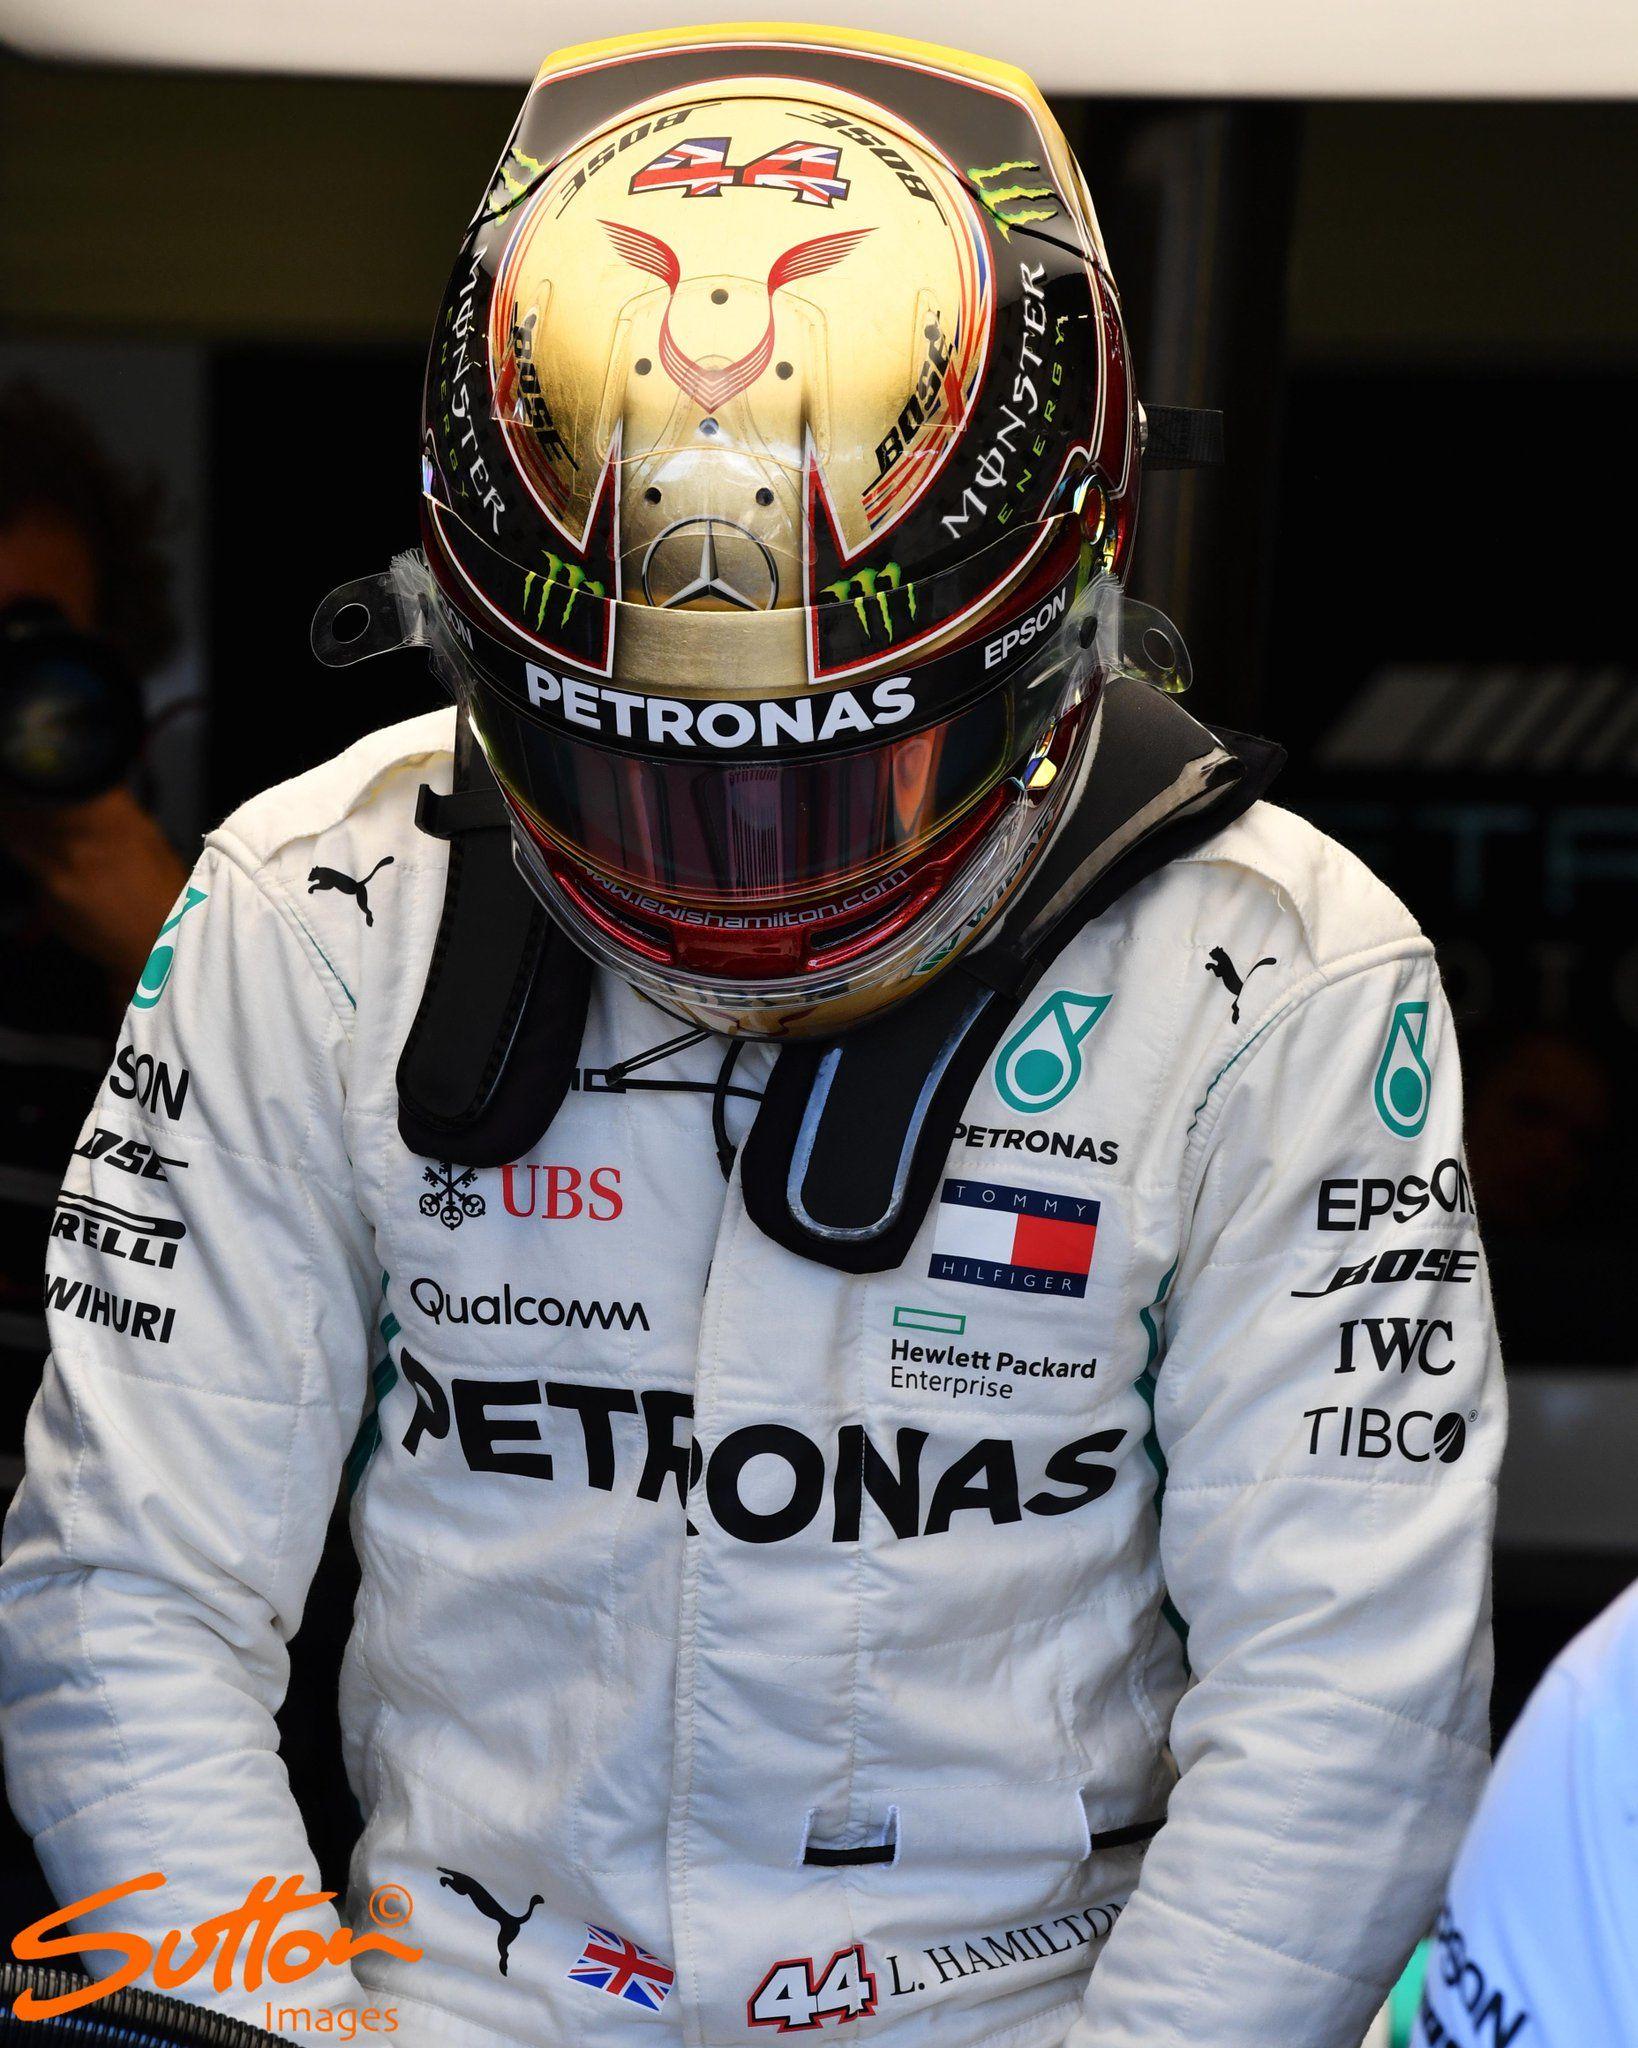 SUTTON IMAGES on. Formula One. Lewis hamilton, Helmet